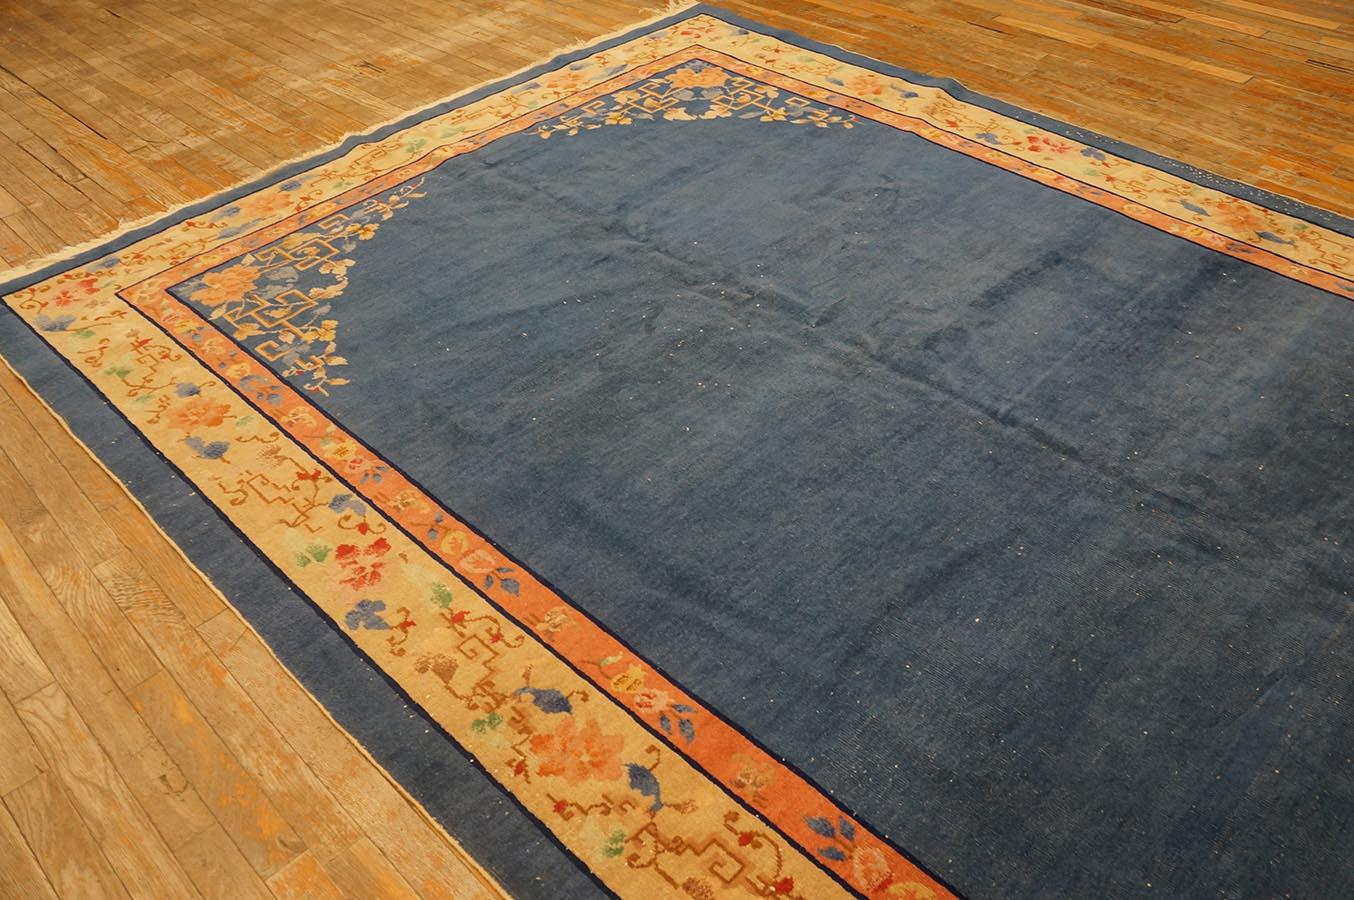 1920s Chinese Art Deco Carpet ( 6'9